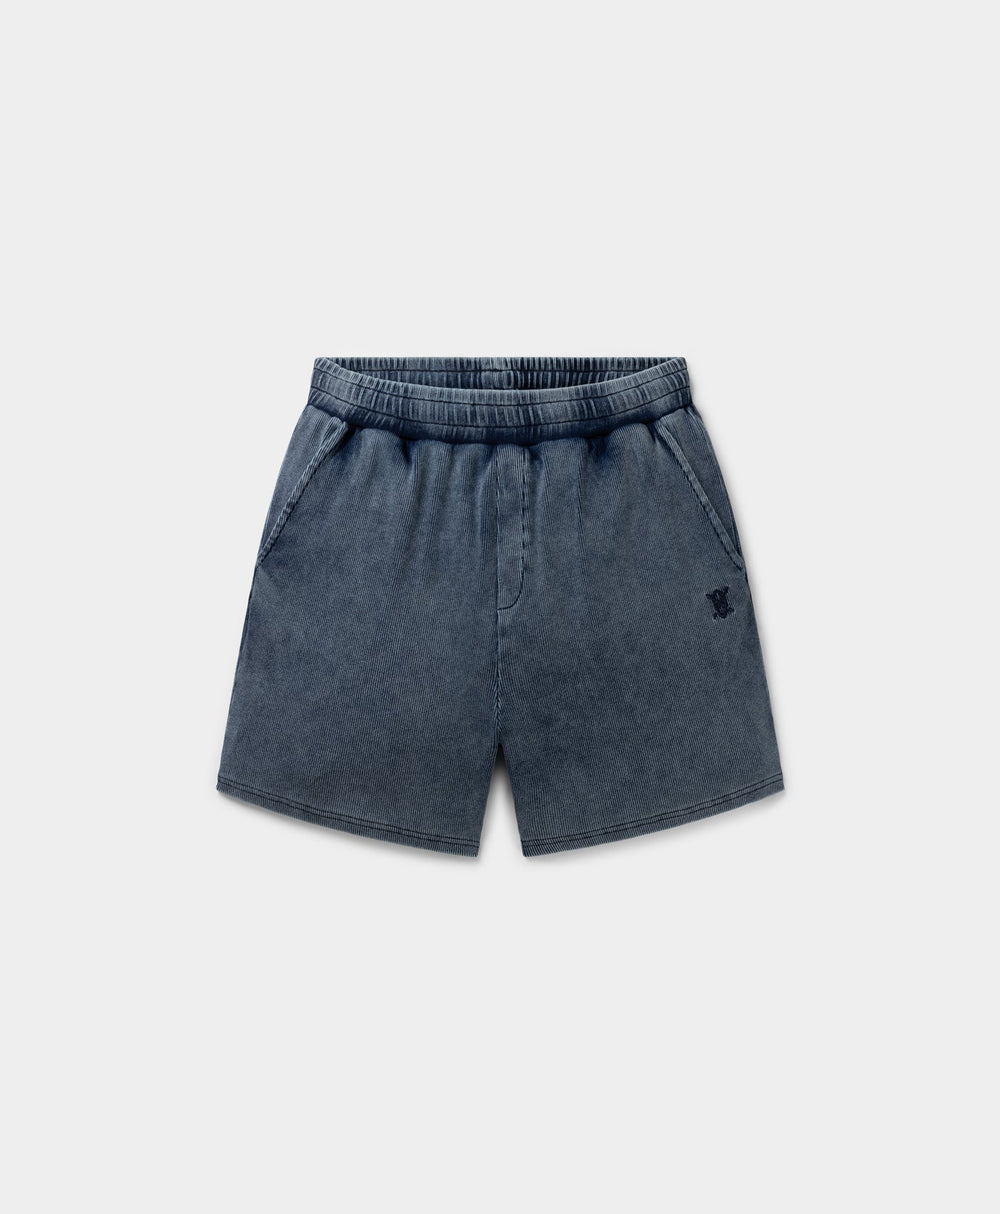 DP - Blue Abasi Shorts - Packshot - Front